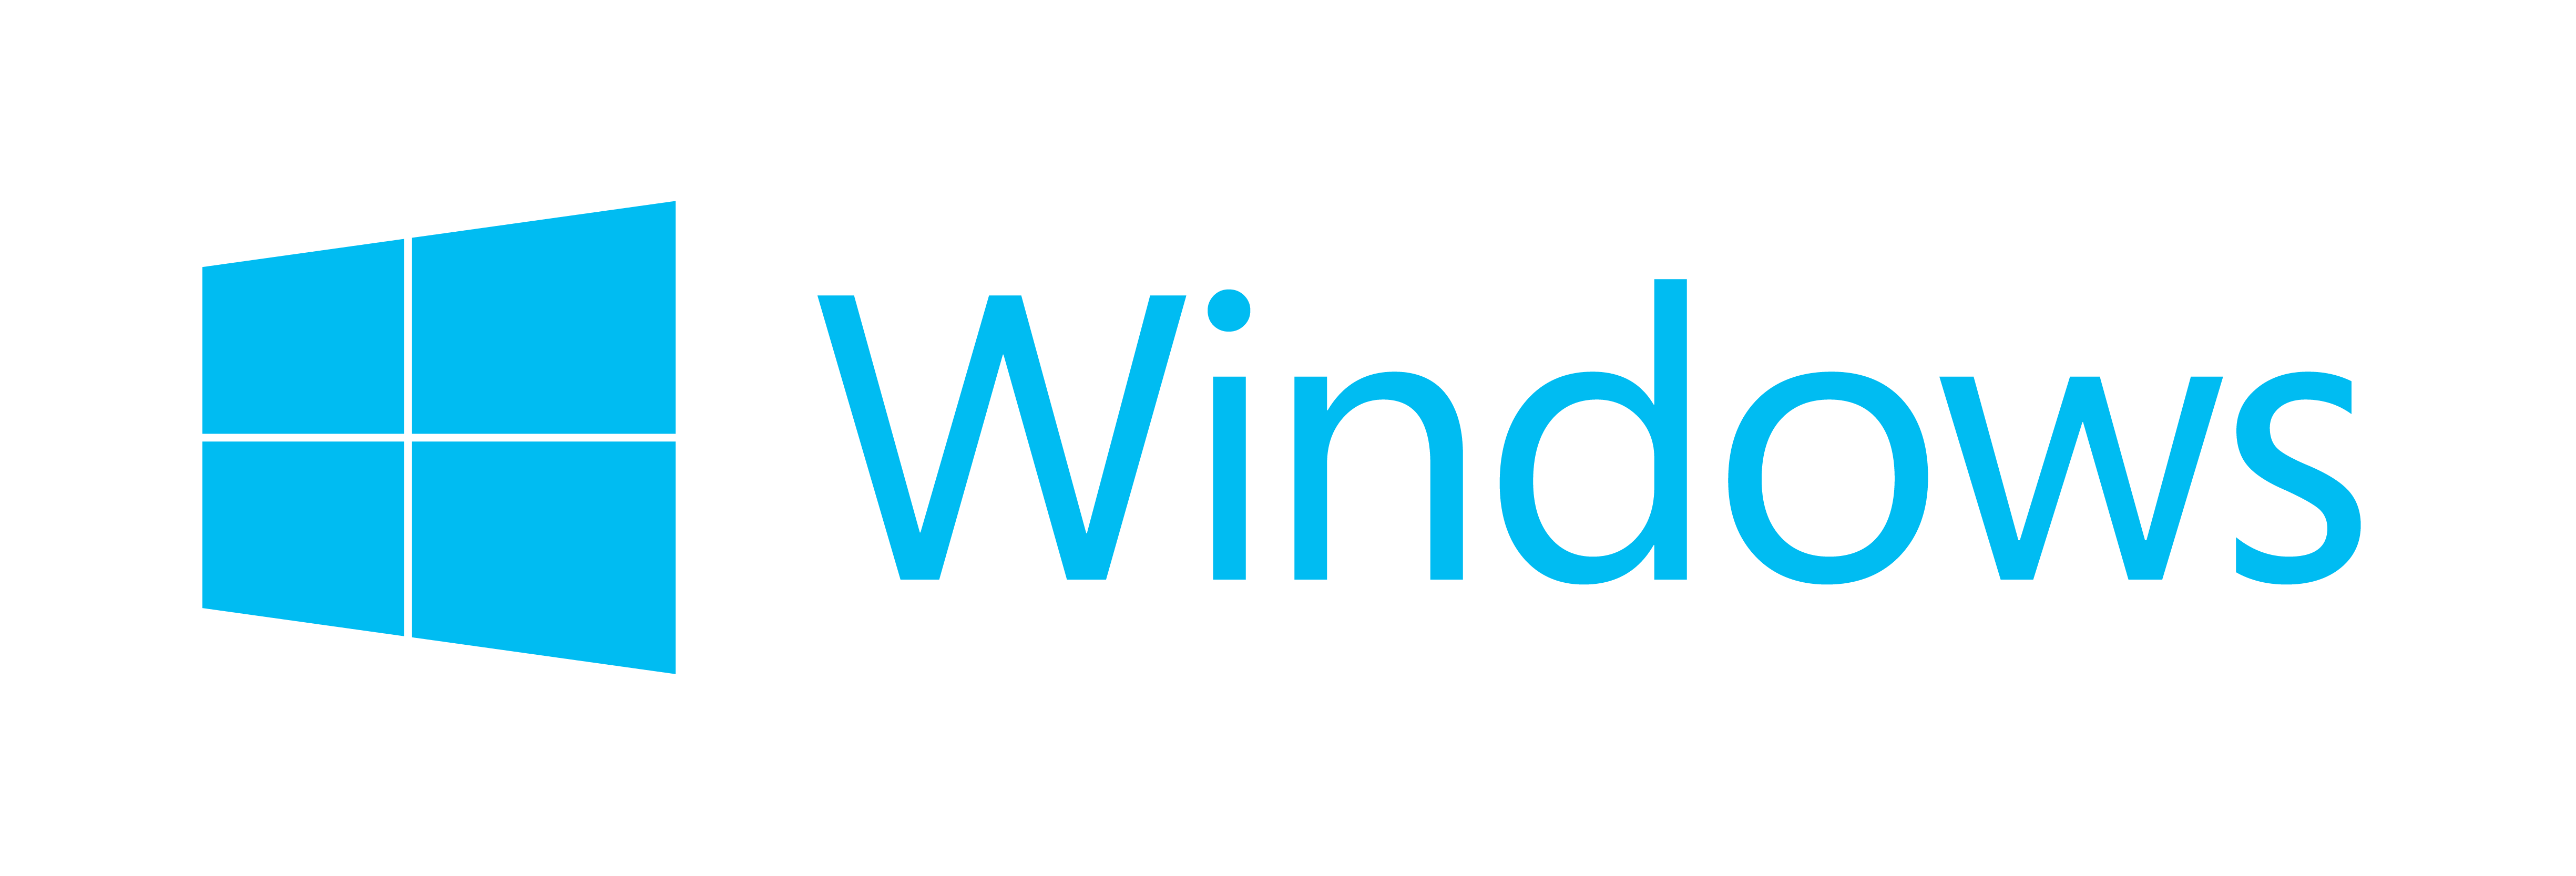 File:Windows logo - 2012.svg